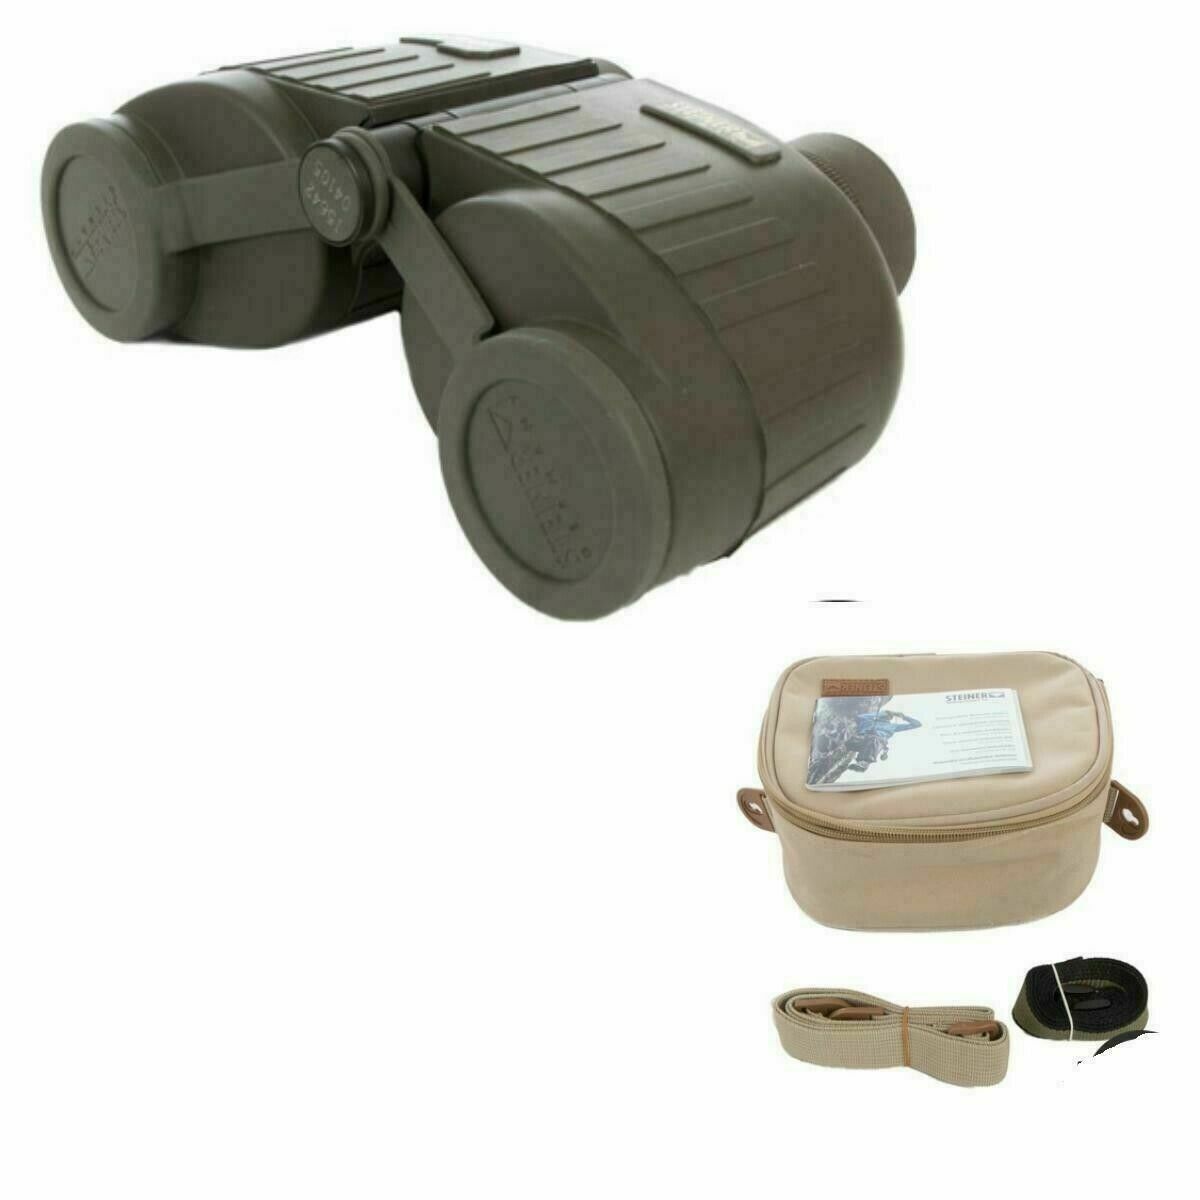 Steiner Military Binoculars Marine / Warrior Quality 7x50, 10x25, 8x30 or 8x25